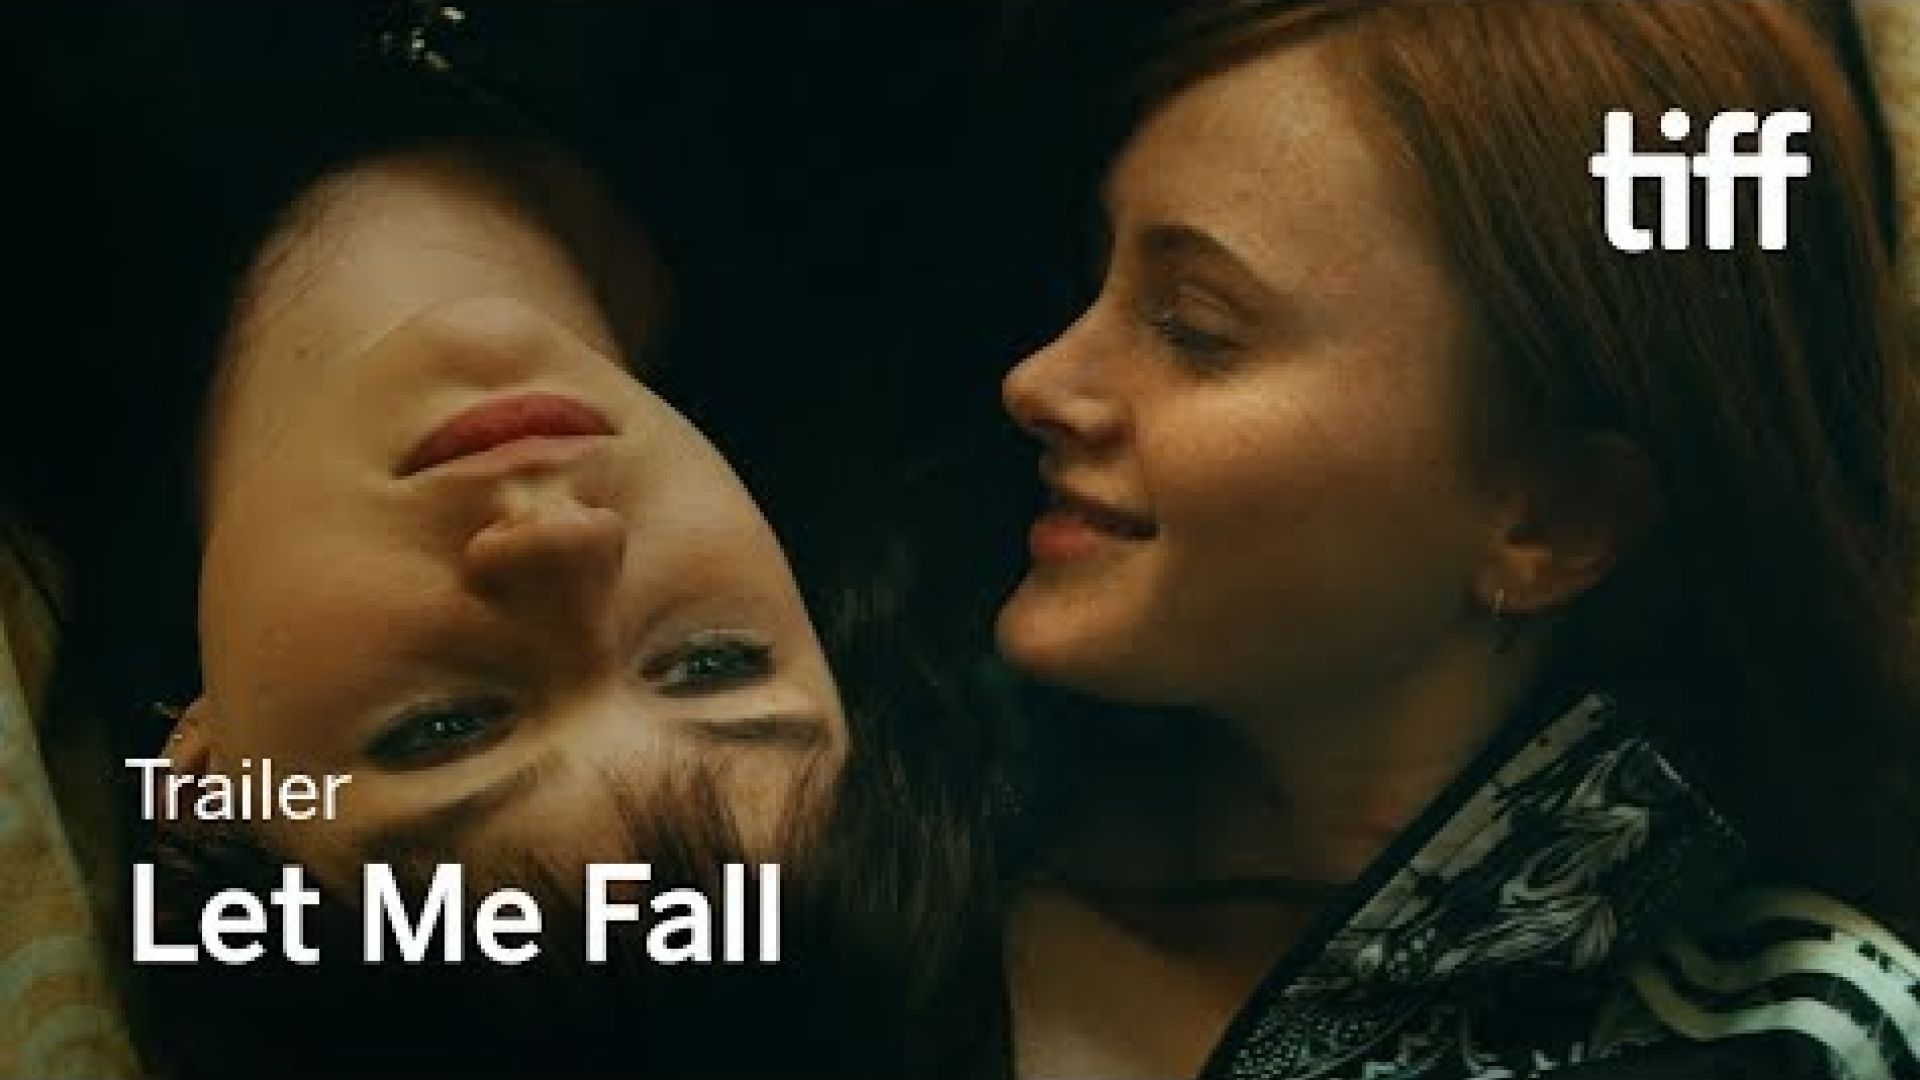 'Let Me Fall' Trailer